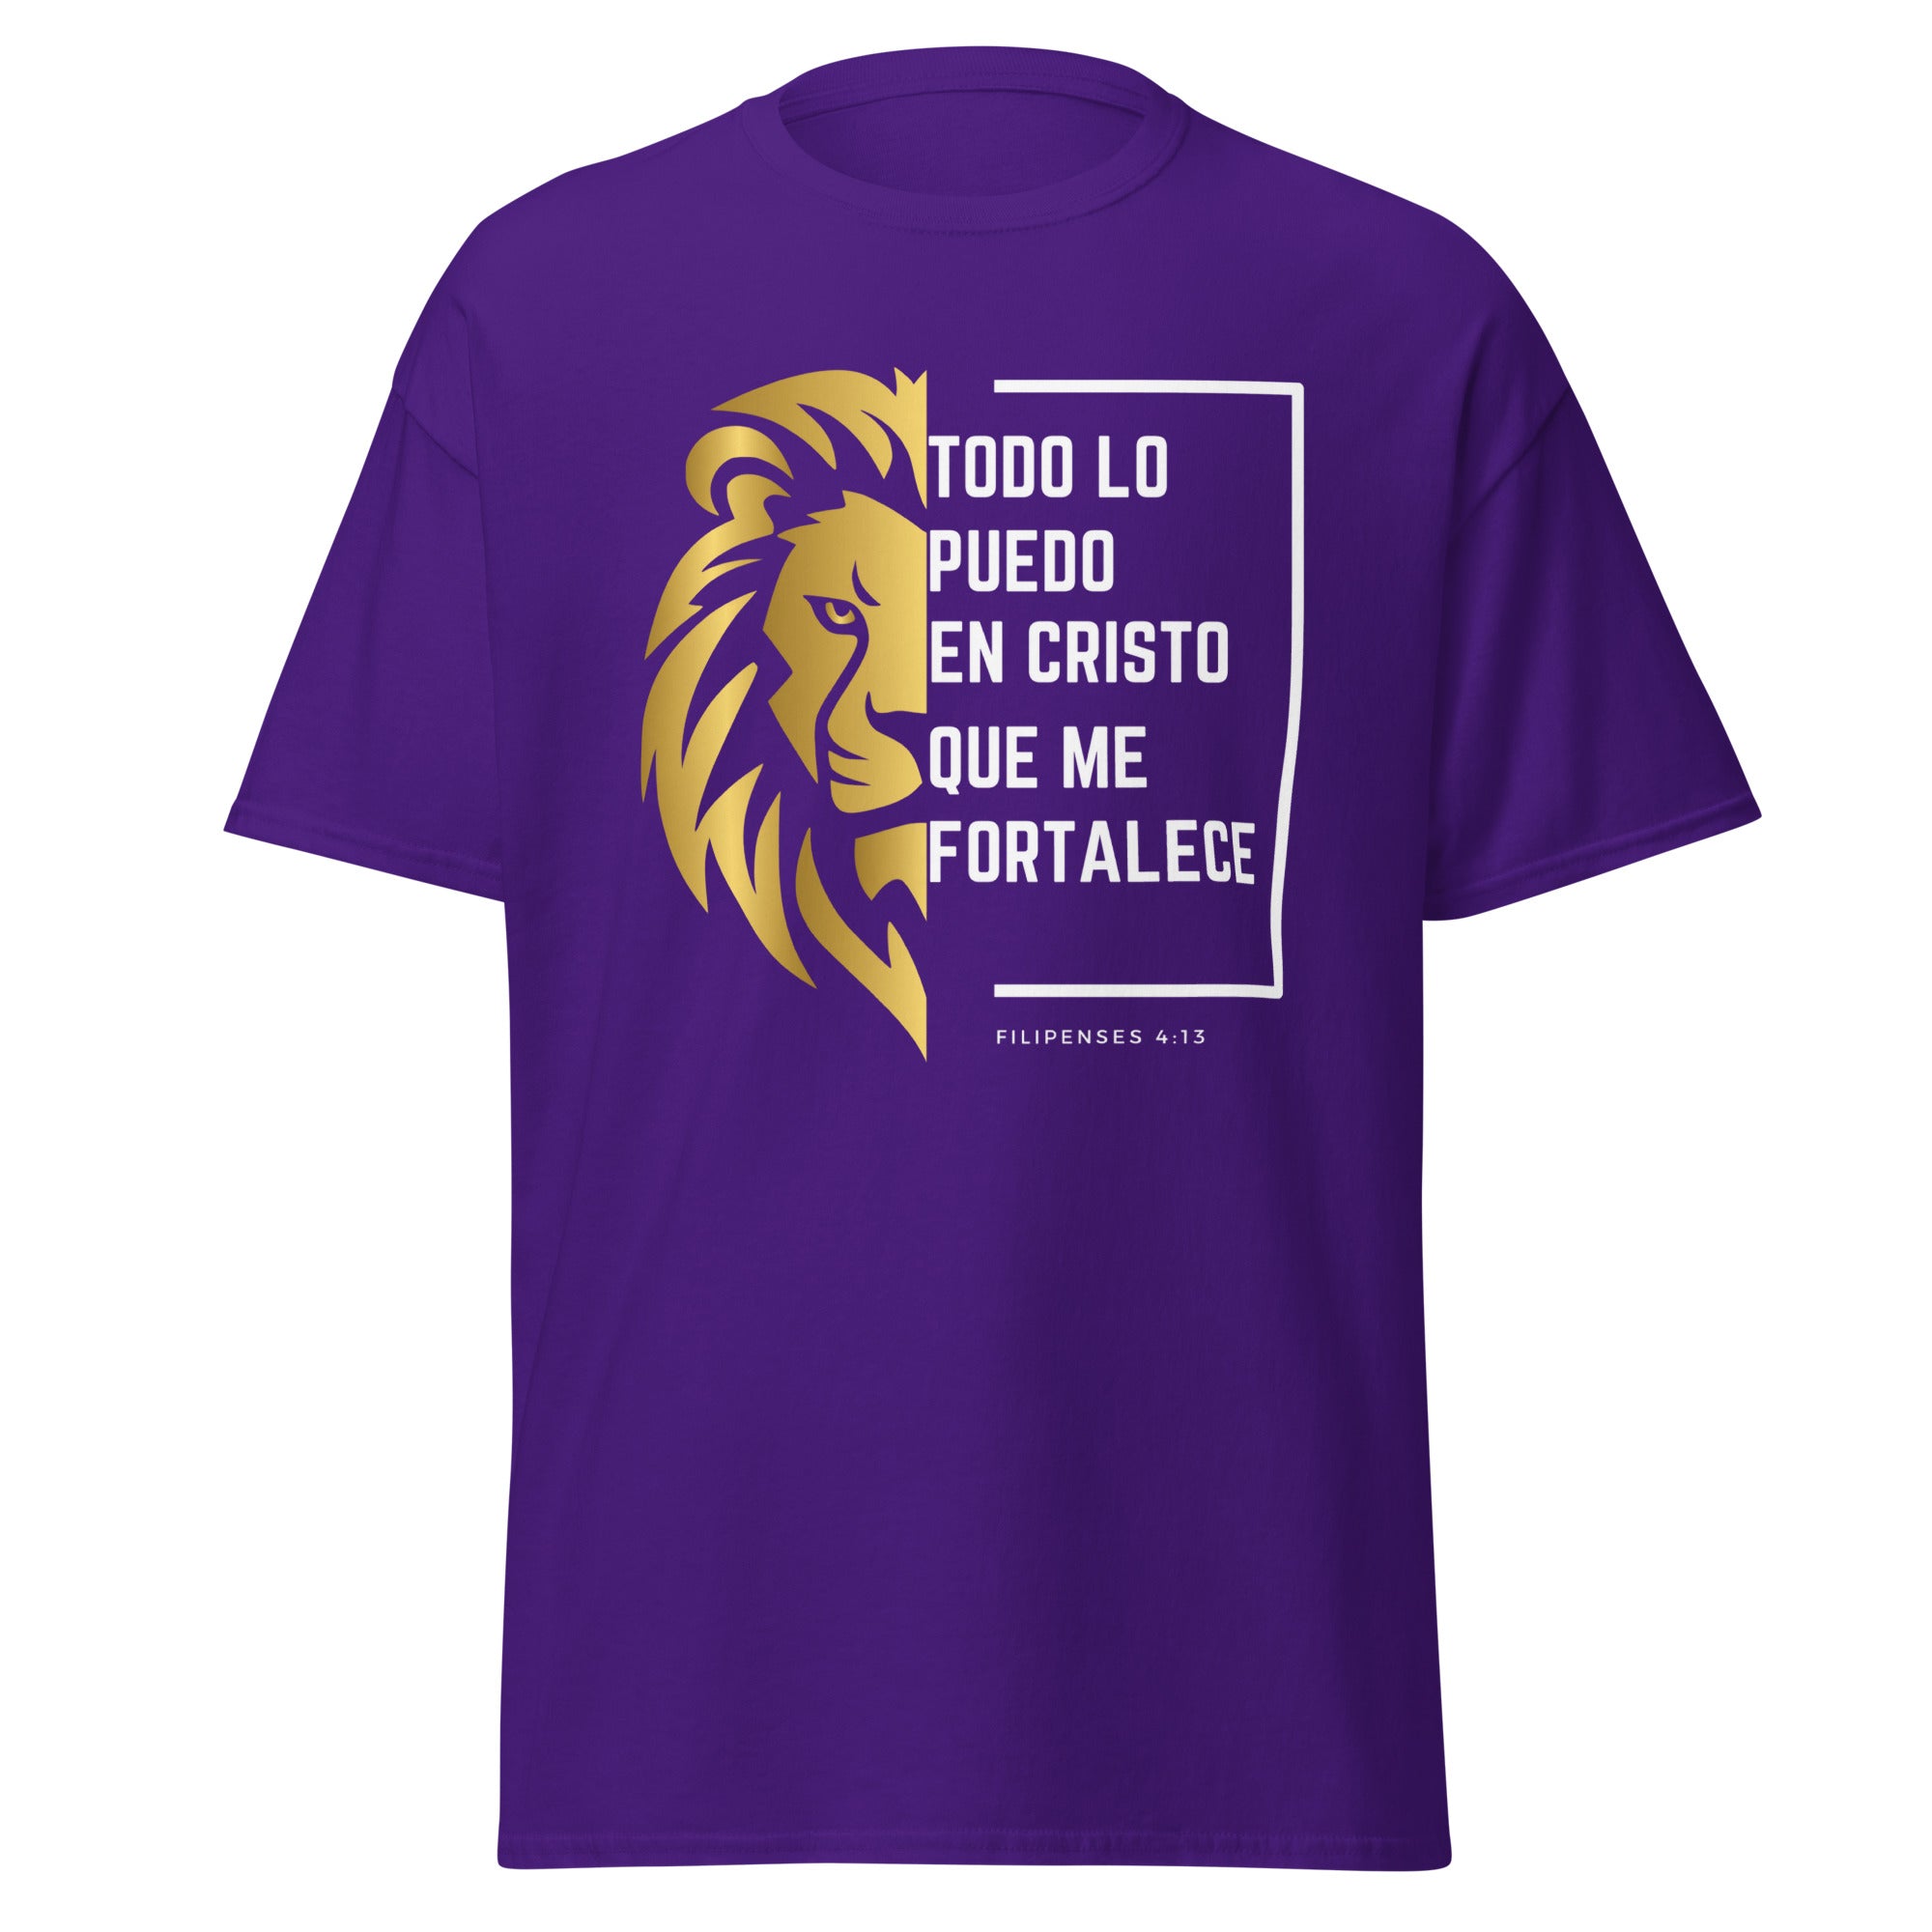 I can do all things in Christ, 100% Cotton Christian Shirt / Todo lo Puedo en Cristo, Camisa Cristana 100% Algodon